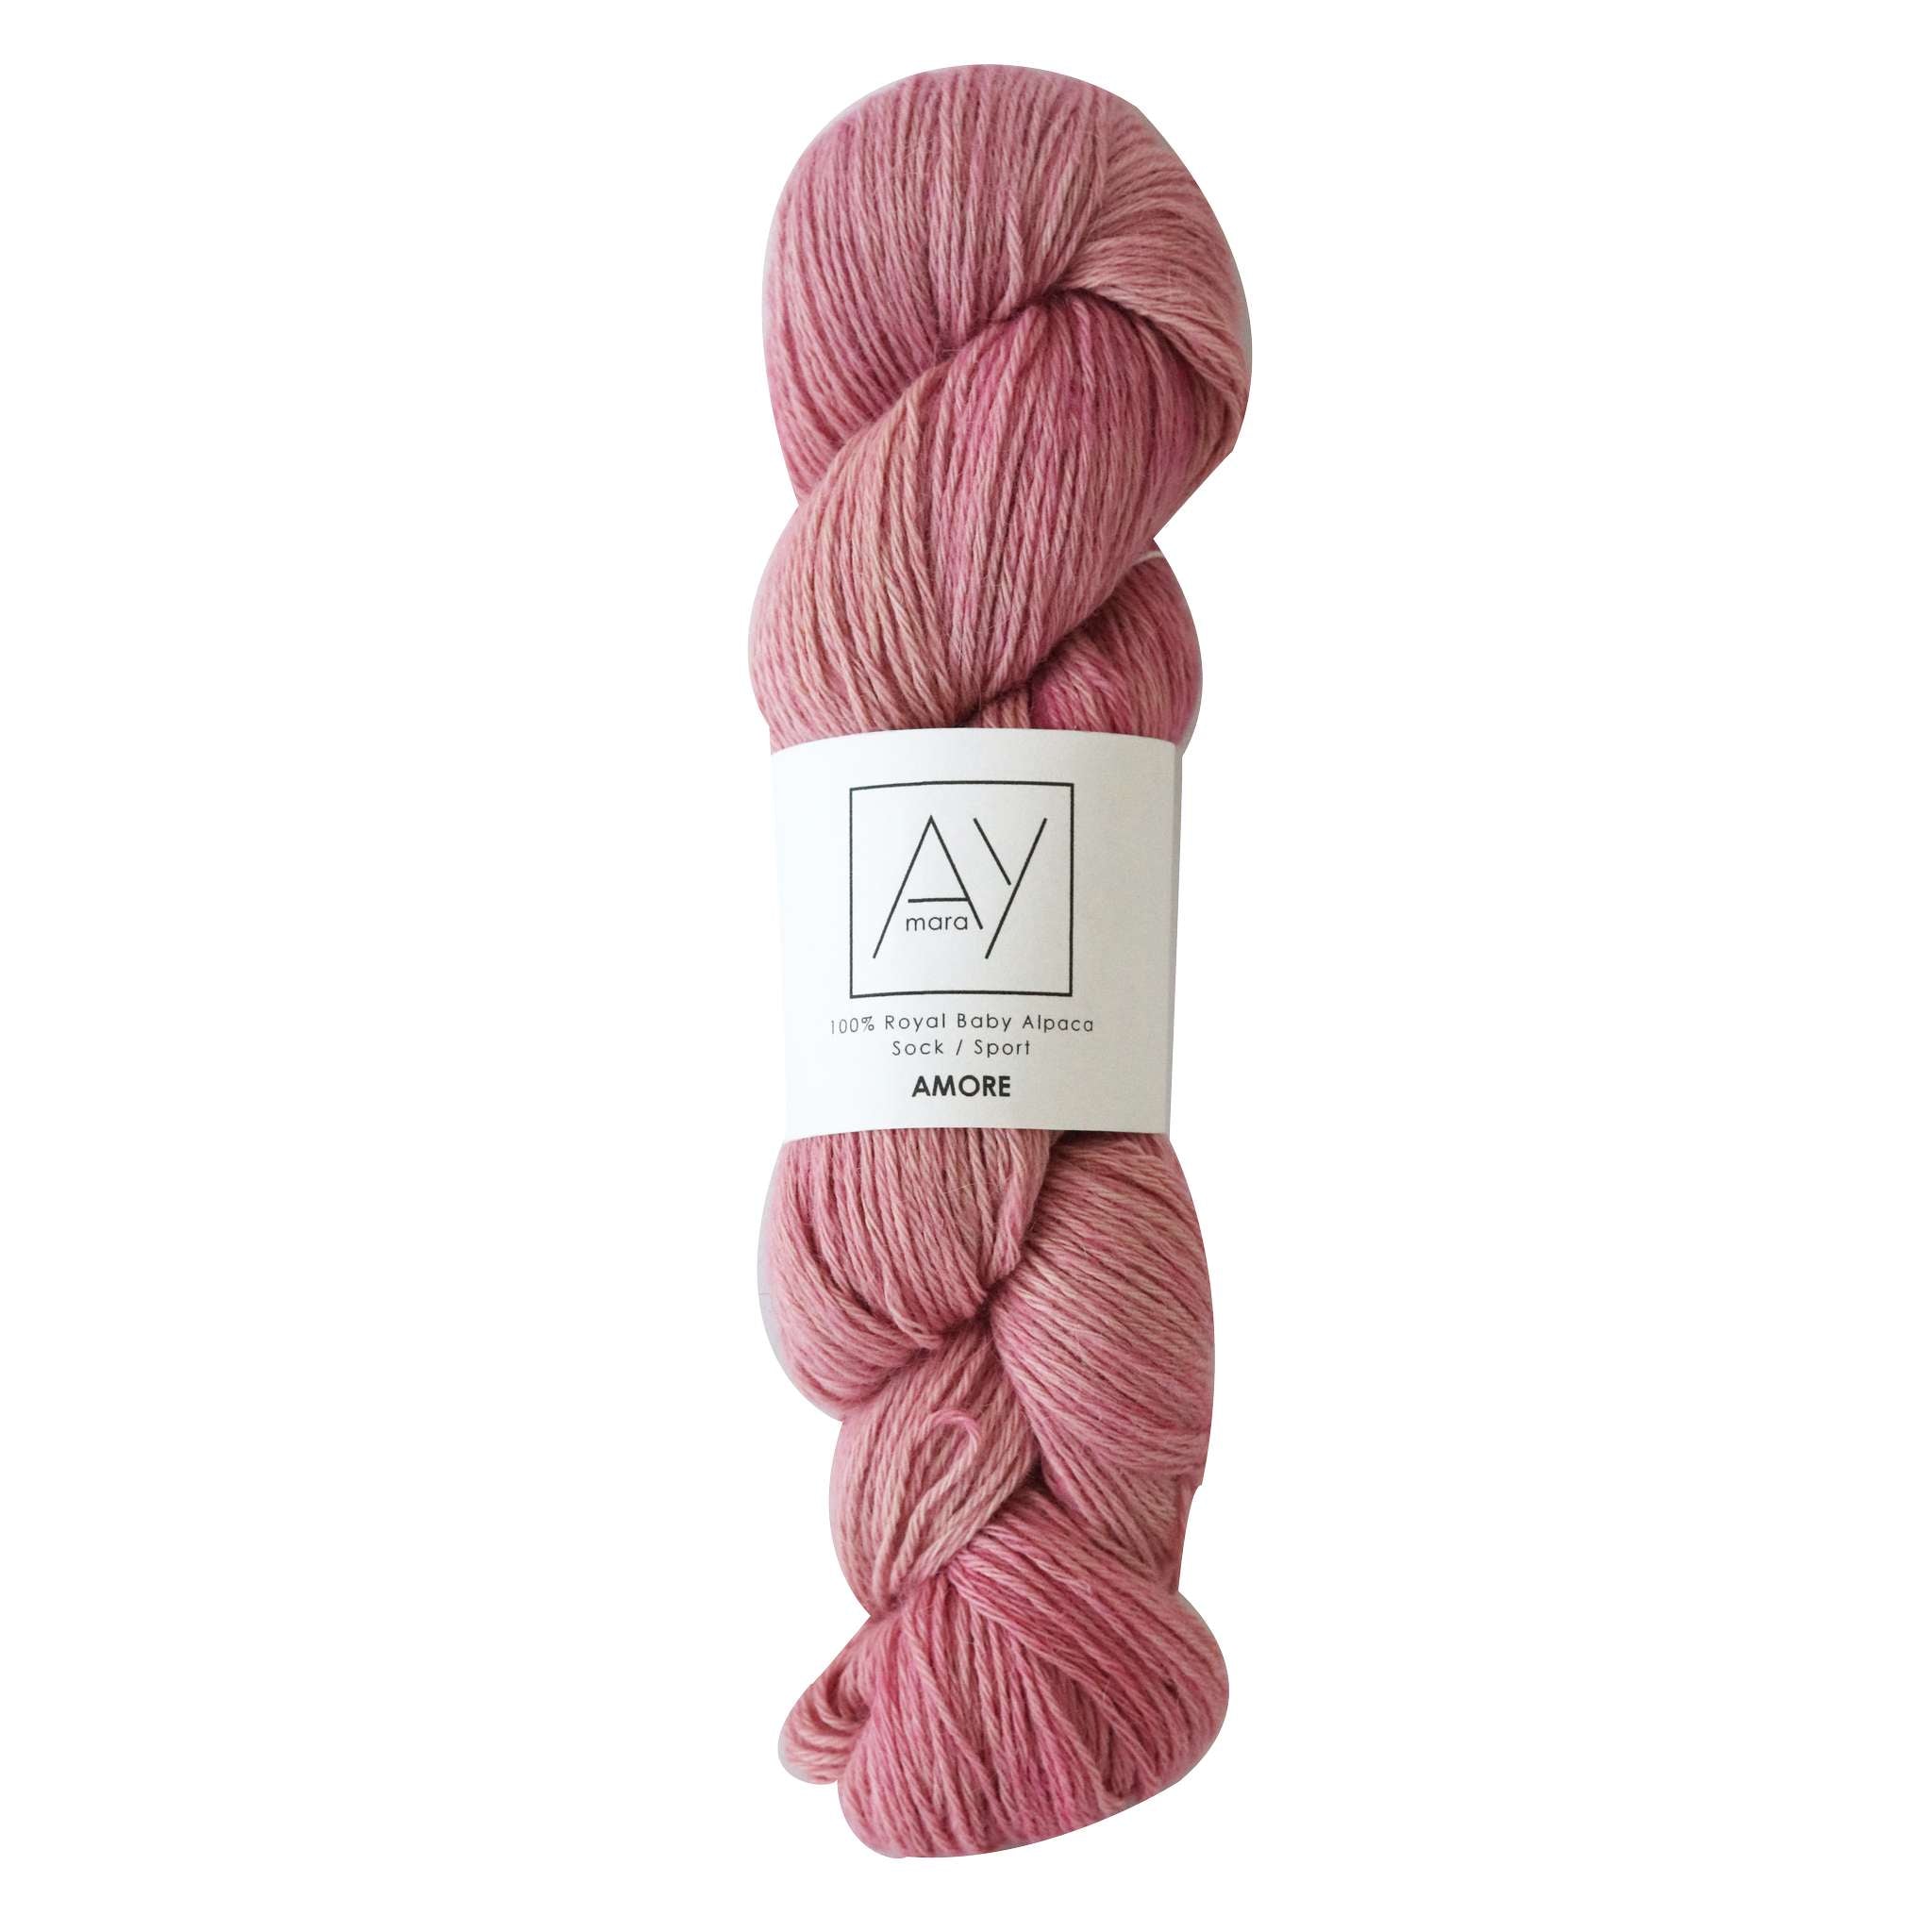 Aymara Amore Alpaca Sock Yarn